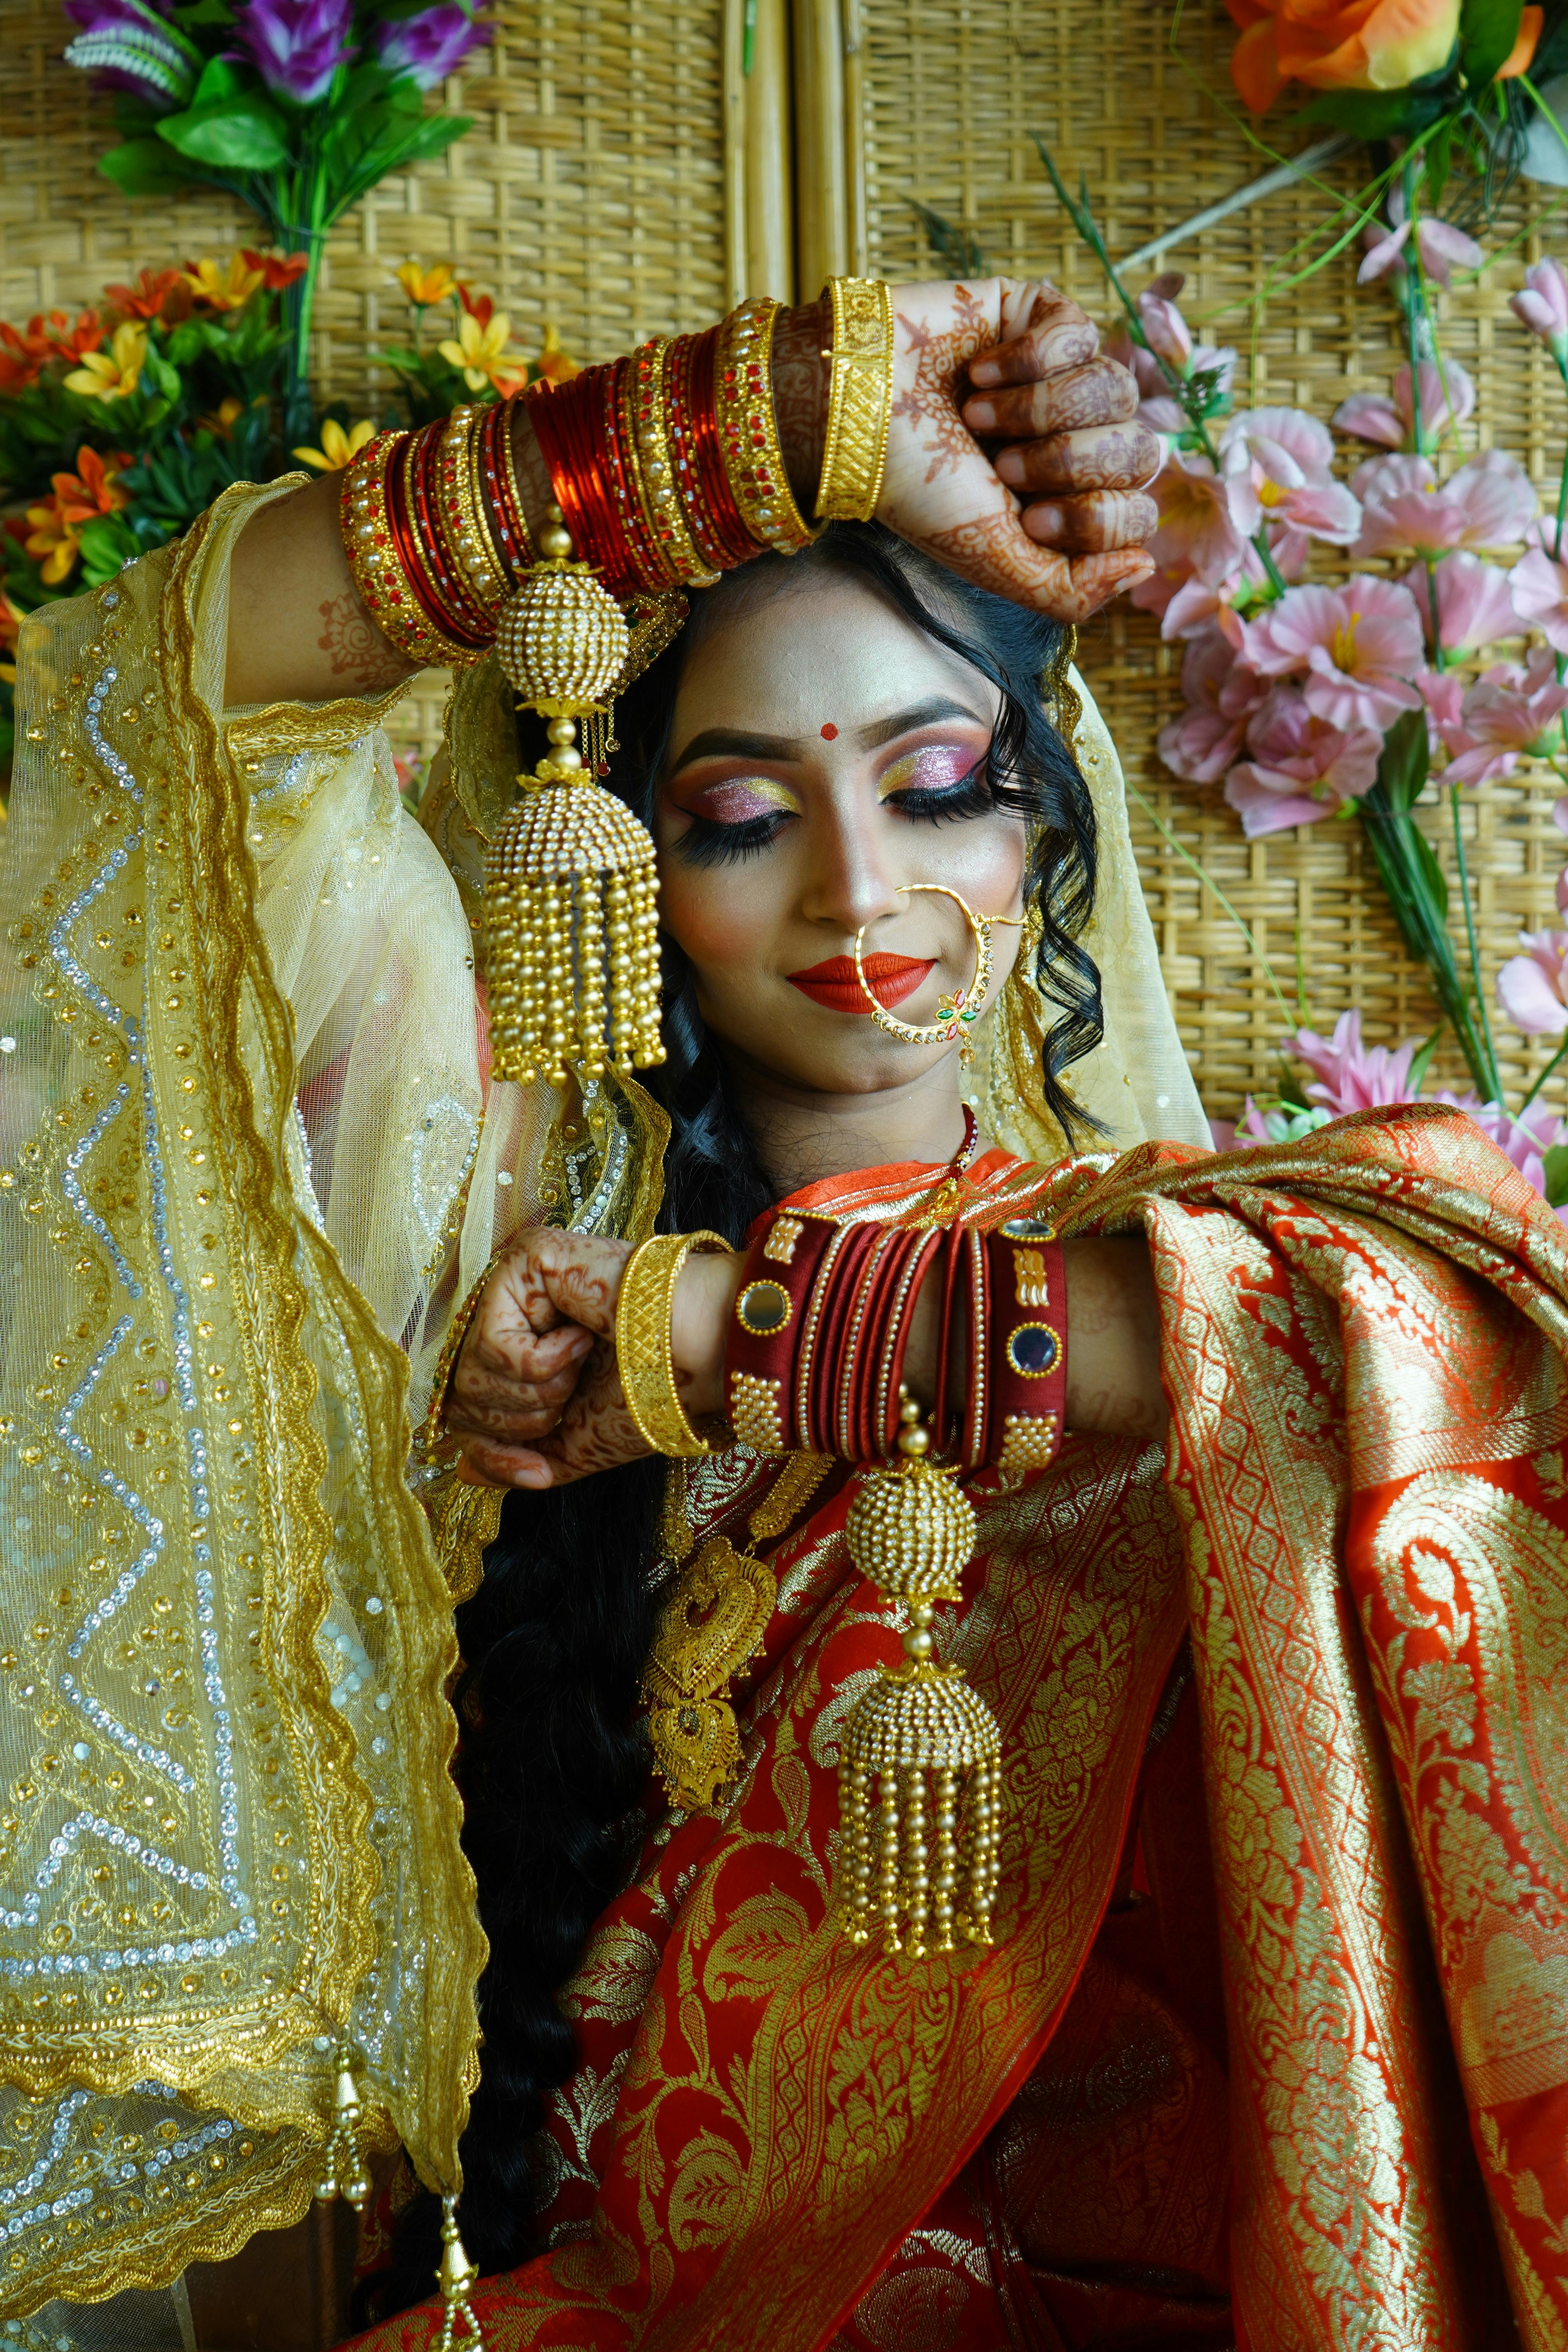 Bengali Wedding Pose added a new photo. - Bengali Wedding Pose